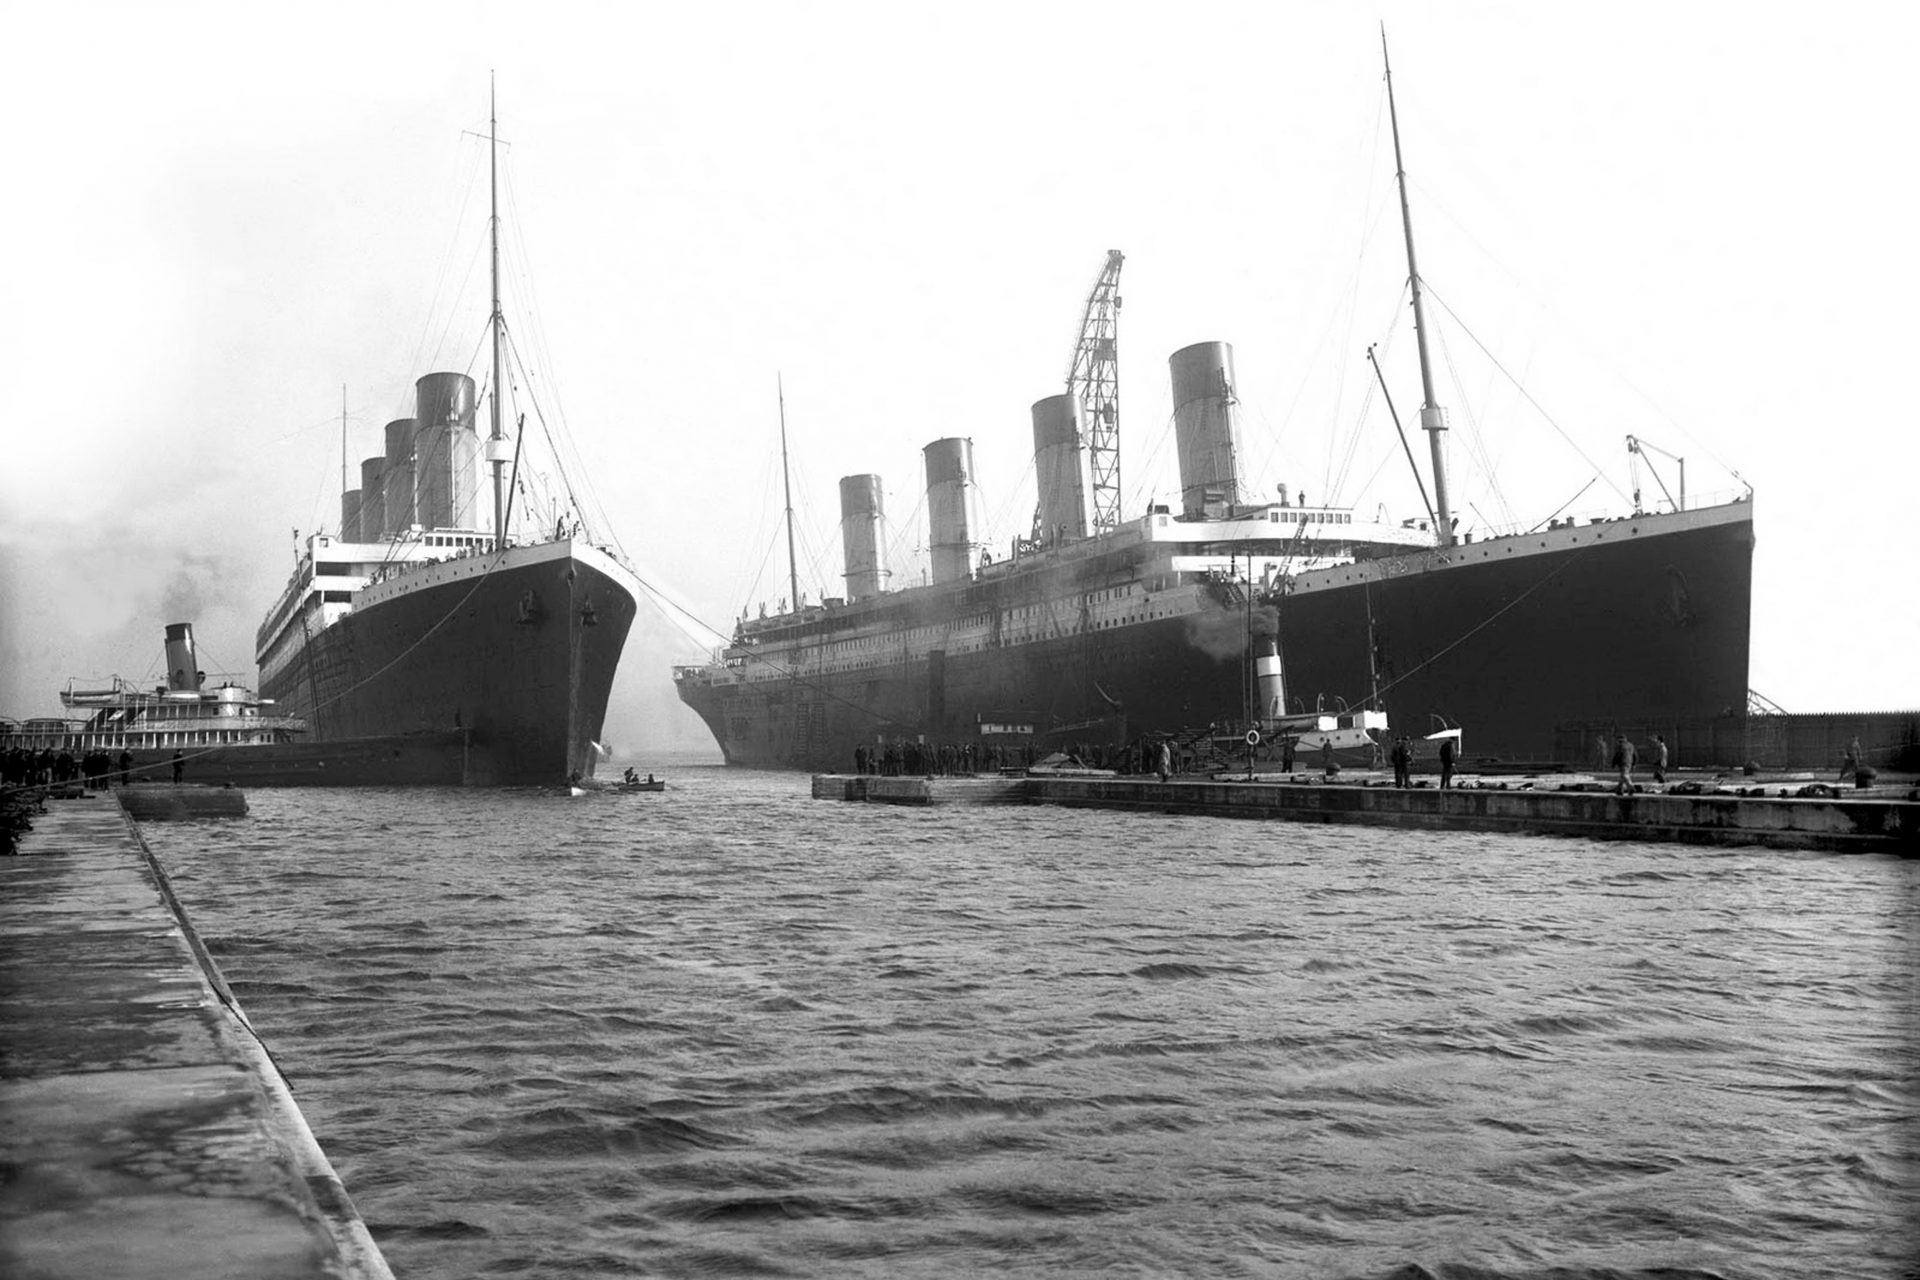 Olympic oder Titanic?